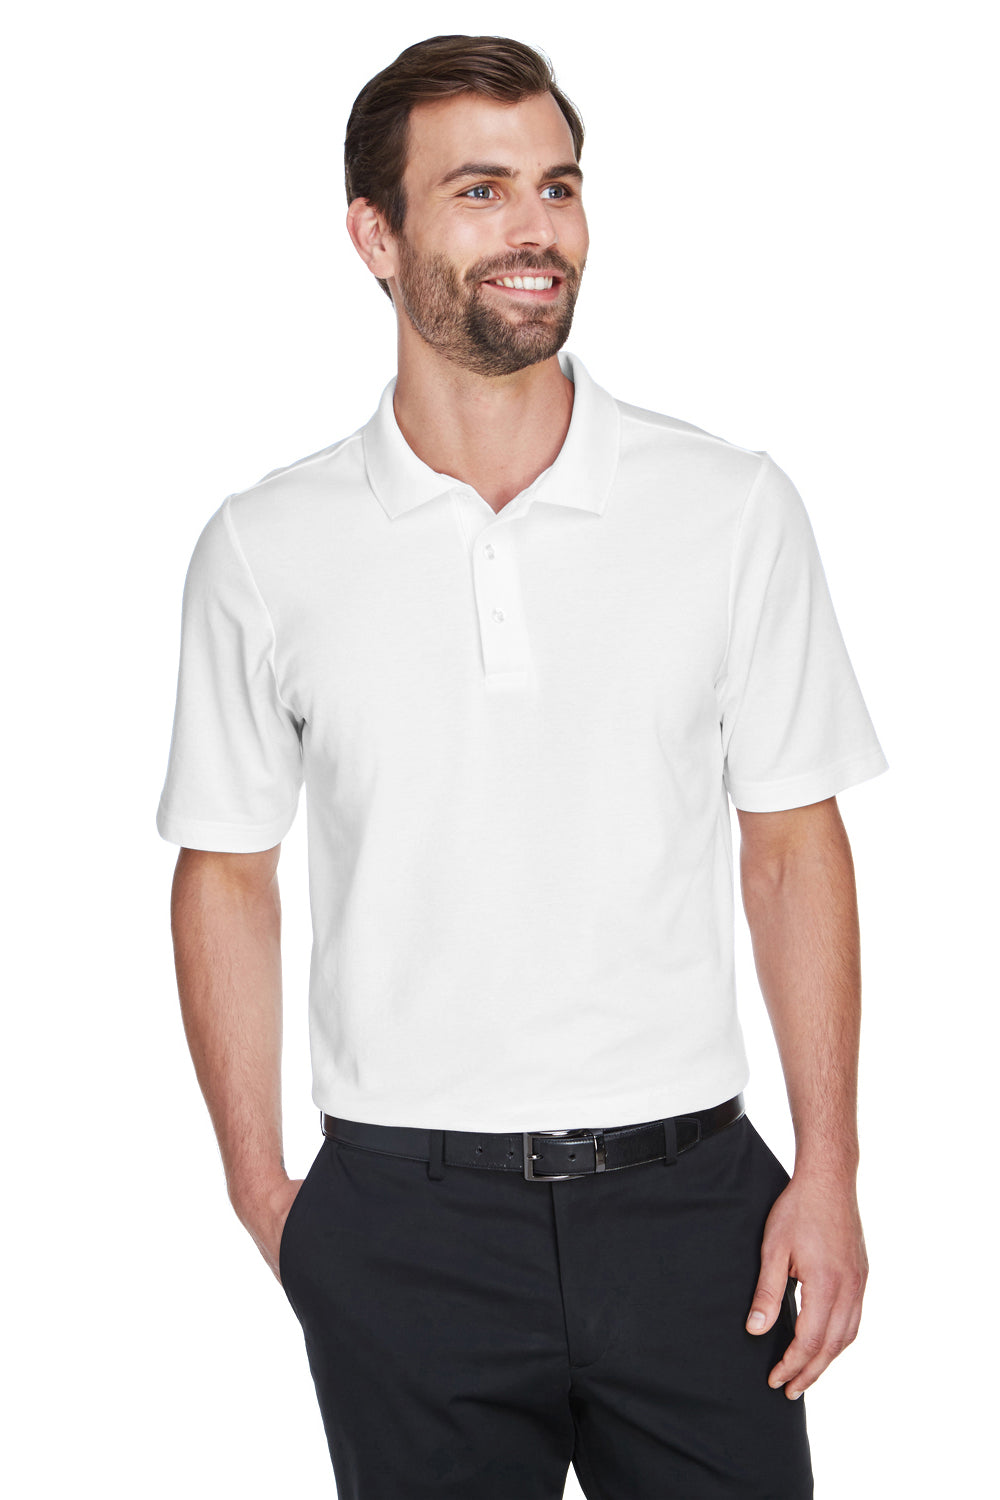 Devon & Jones Mens CrownLux Performance Moisture Wicking Short Sleeve Polo Shirt - White